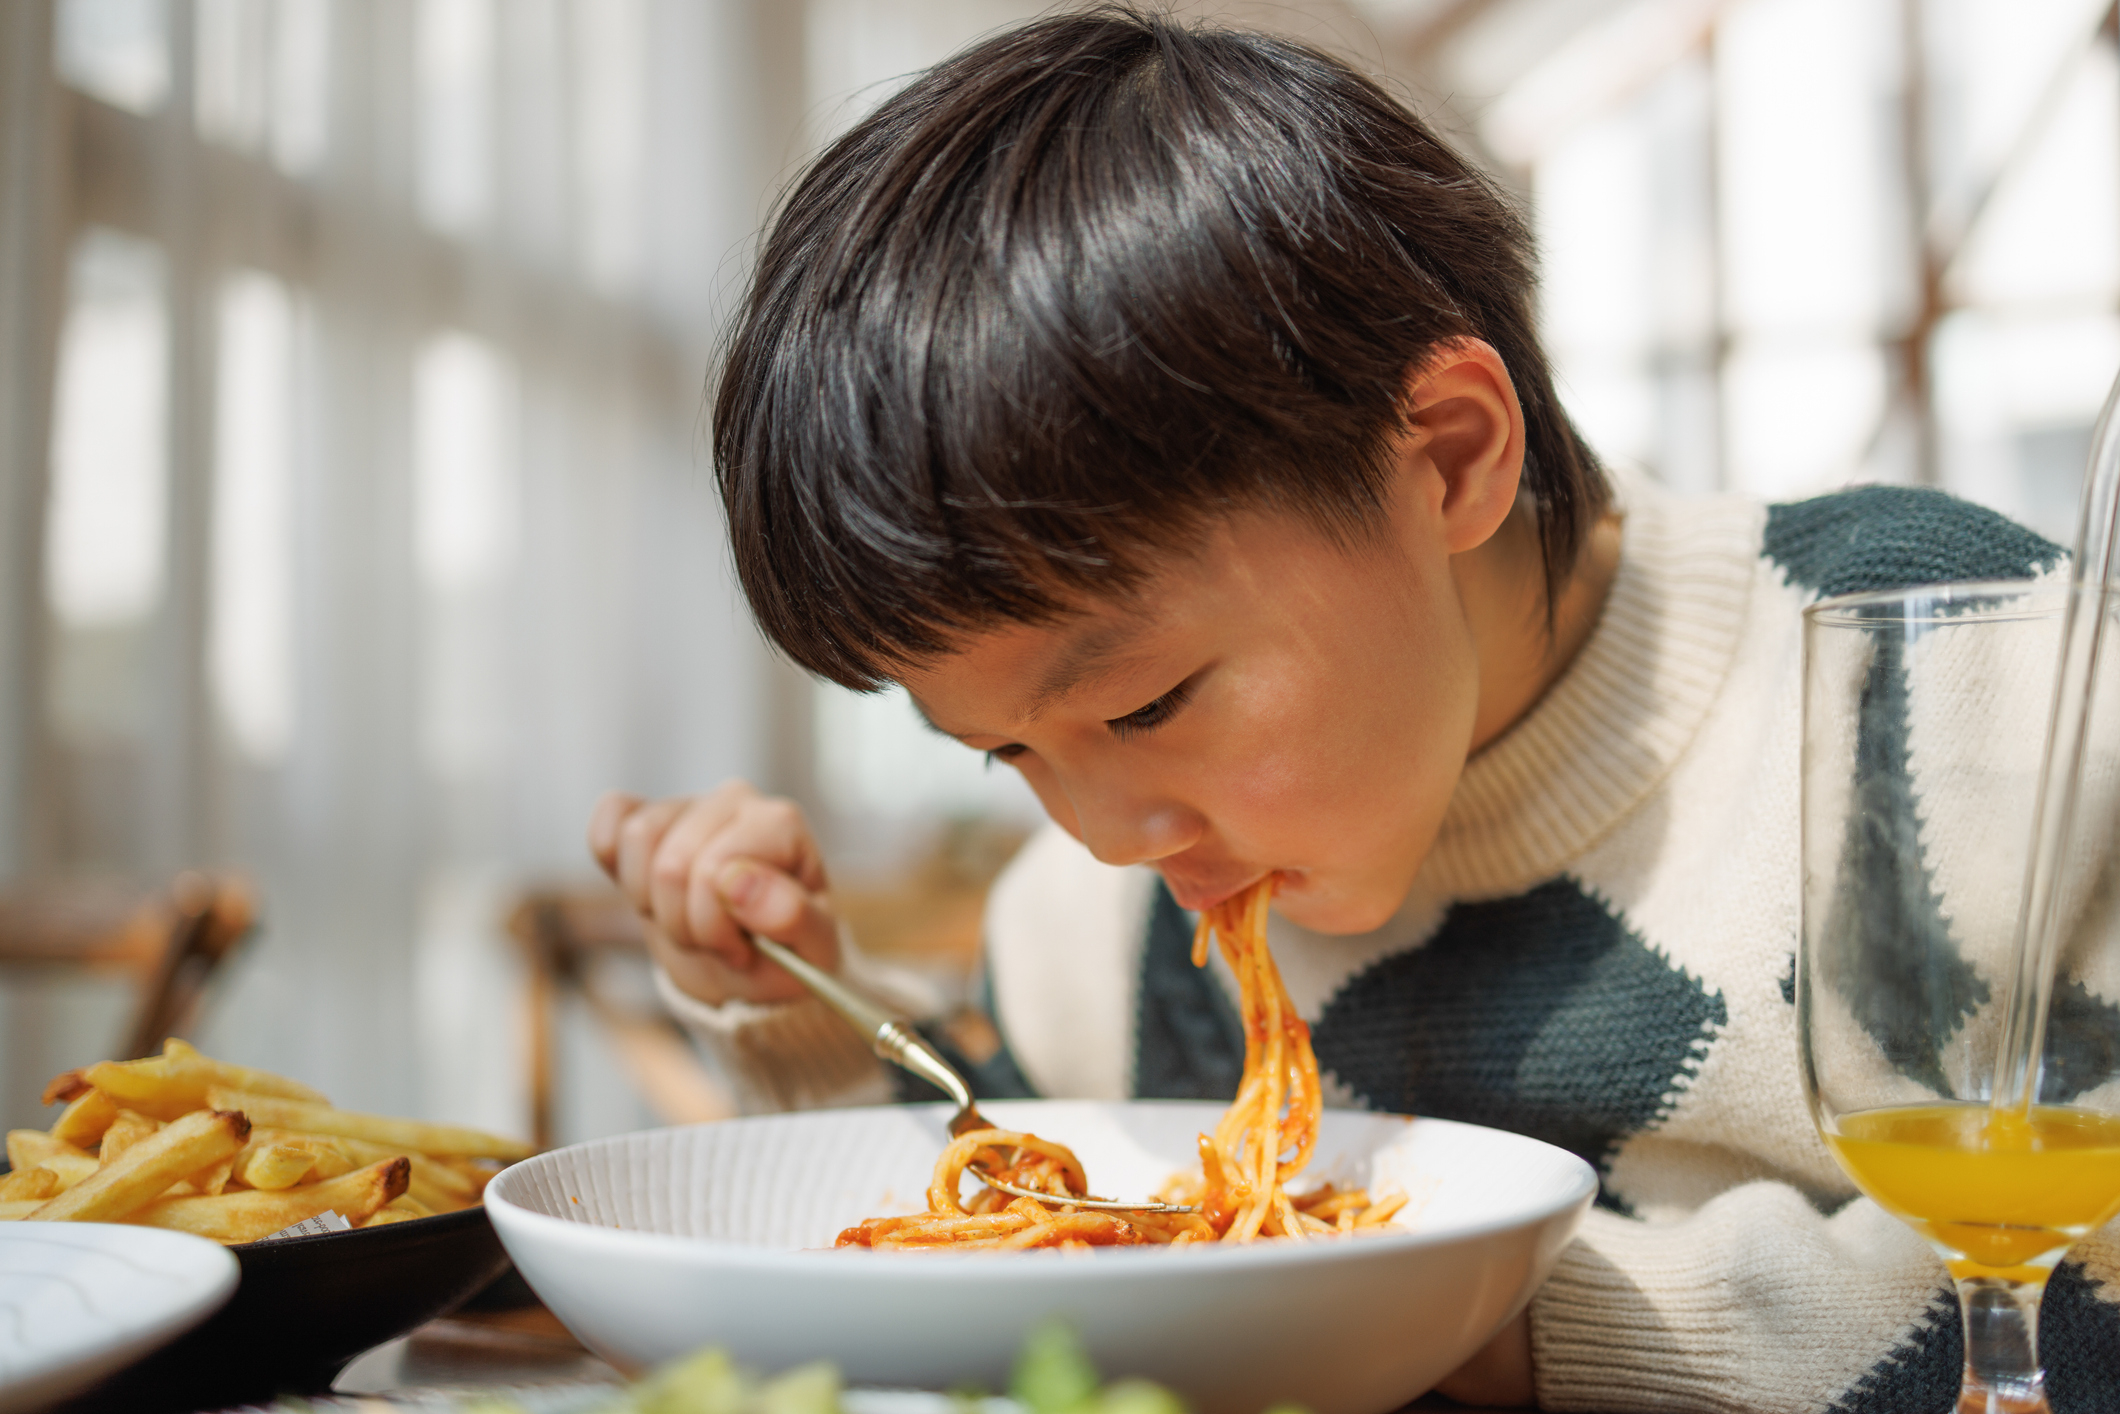 A young boy eating spaghetti